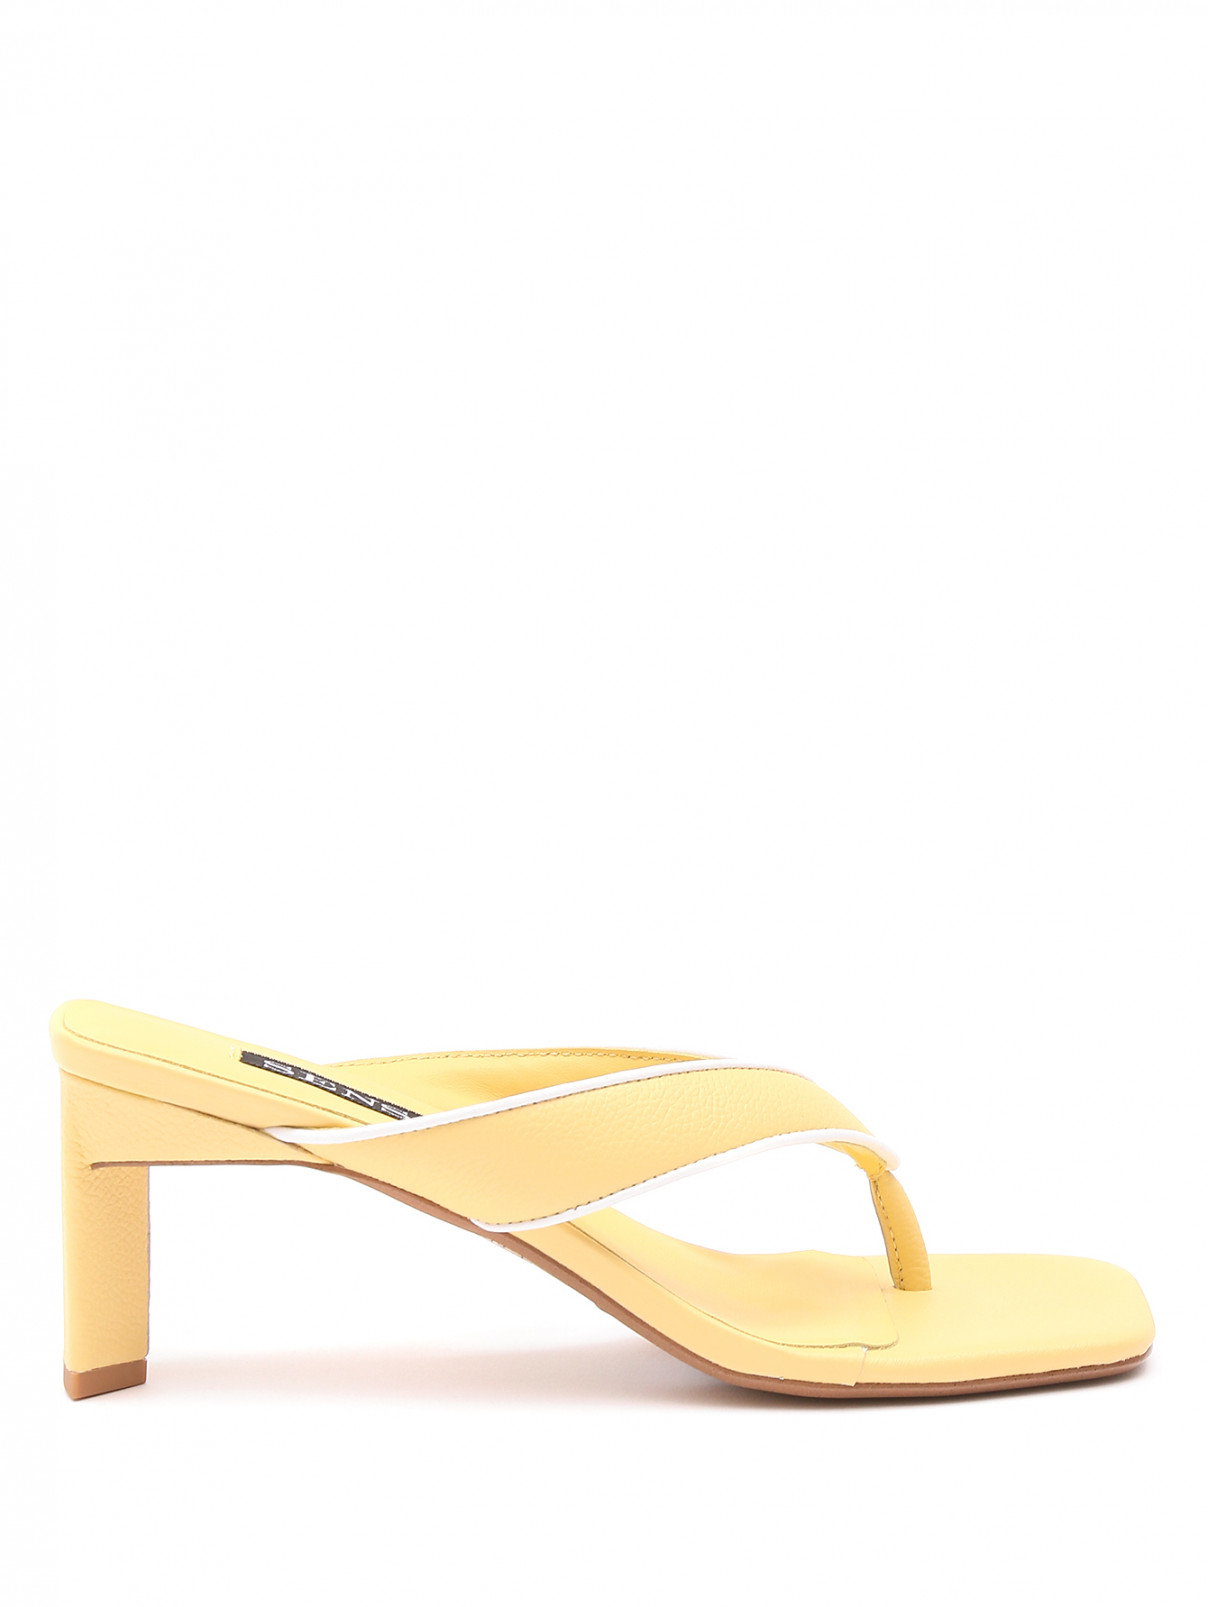 Босоножки из кожи на каблуке Senso  –  Обтравка1  – Цвет:  Желтый